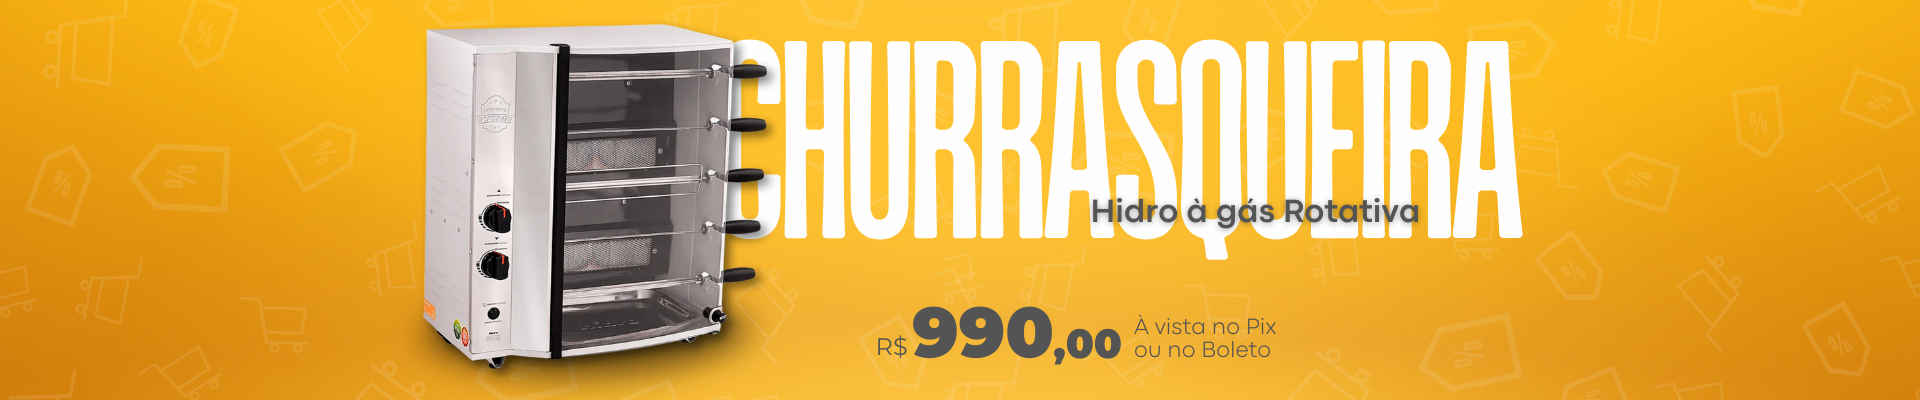 JULHO - Churrasqueira Hidro - Desktop